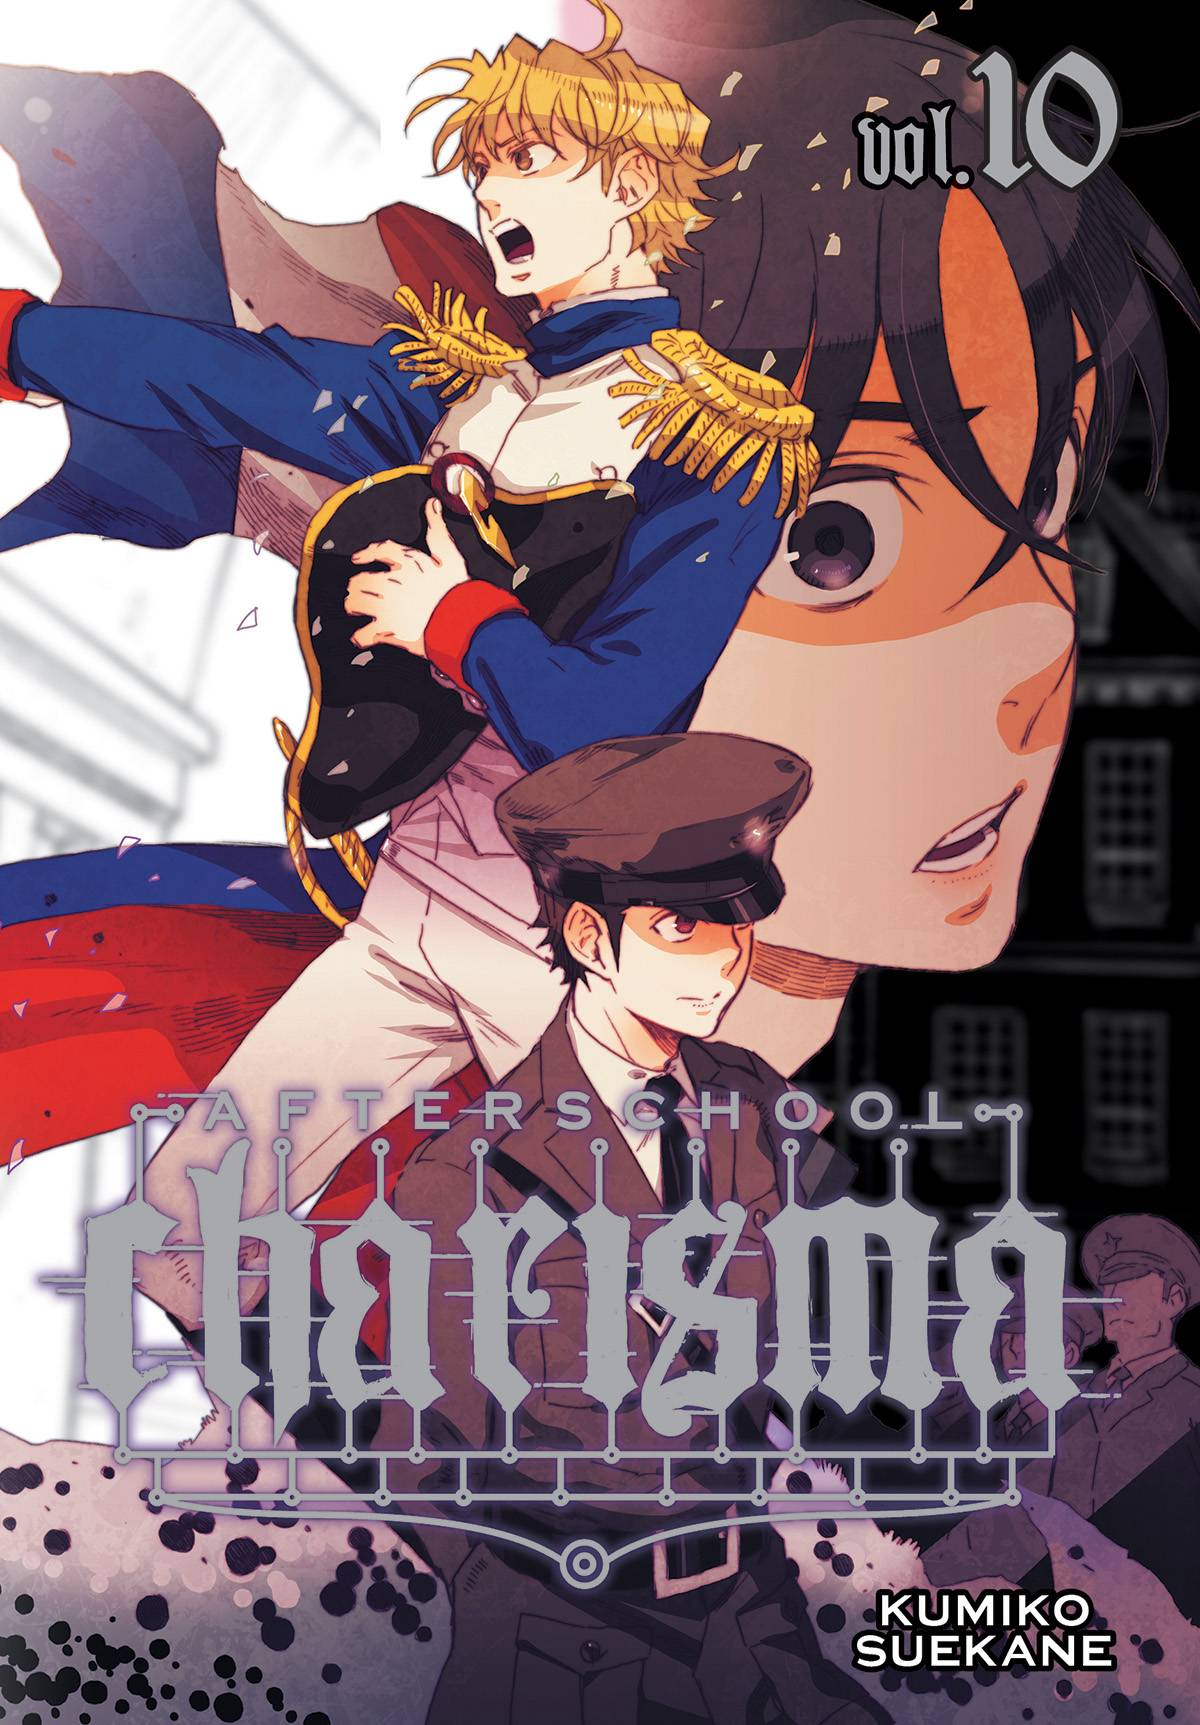 Afterschool Charisma Manga Volume 10